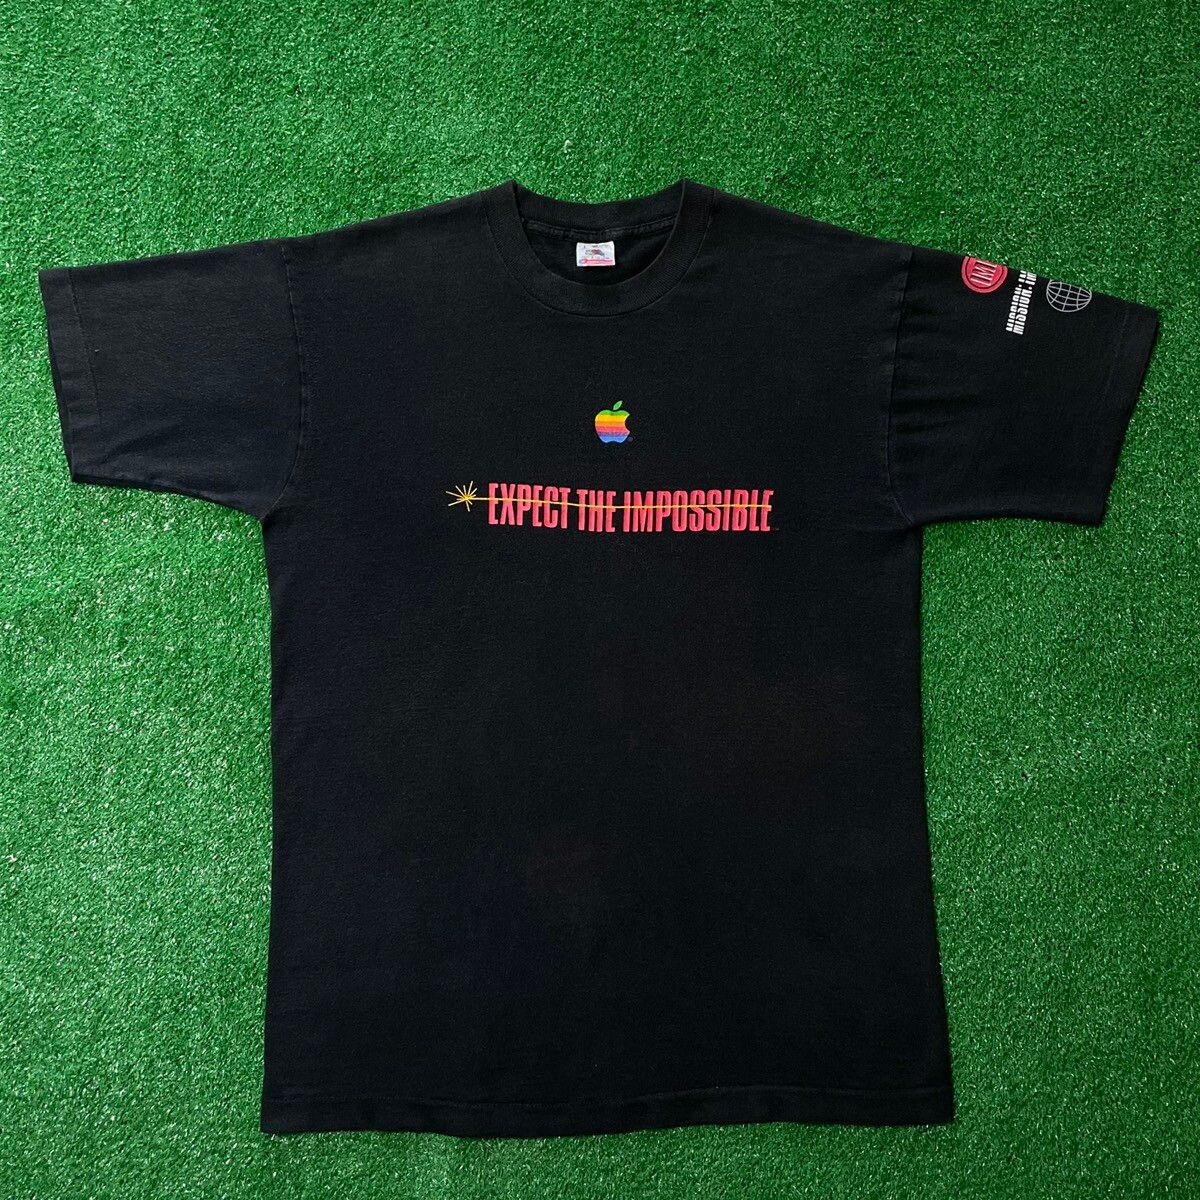 Apple 1996 rare Apple Mission impossible promo | Grailed